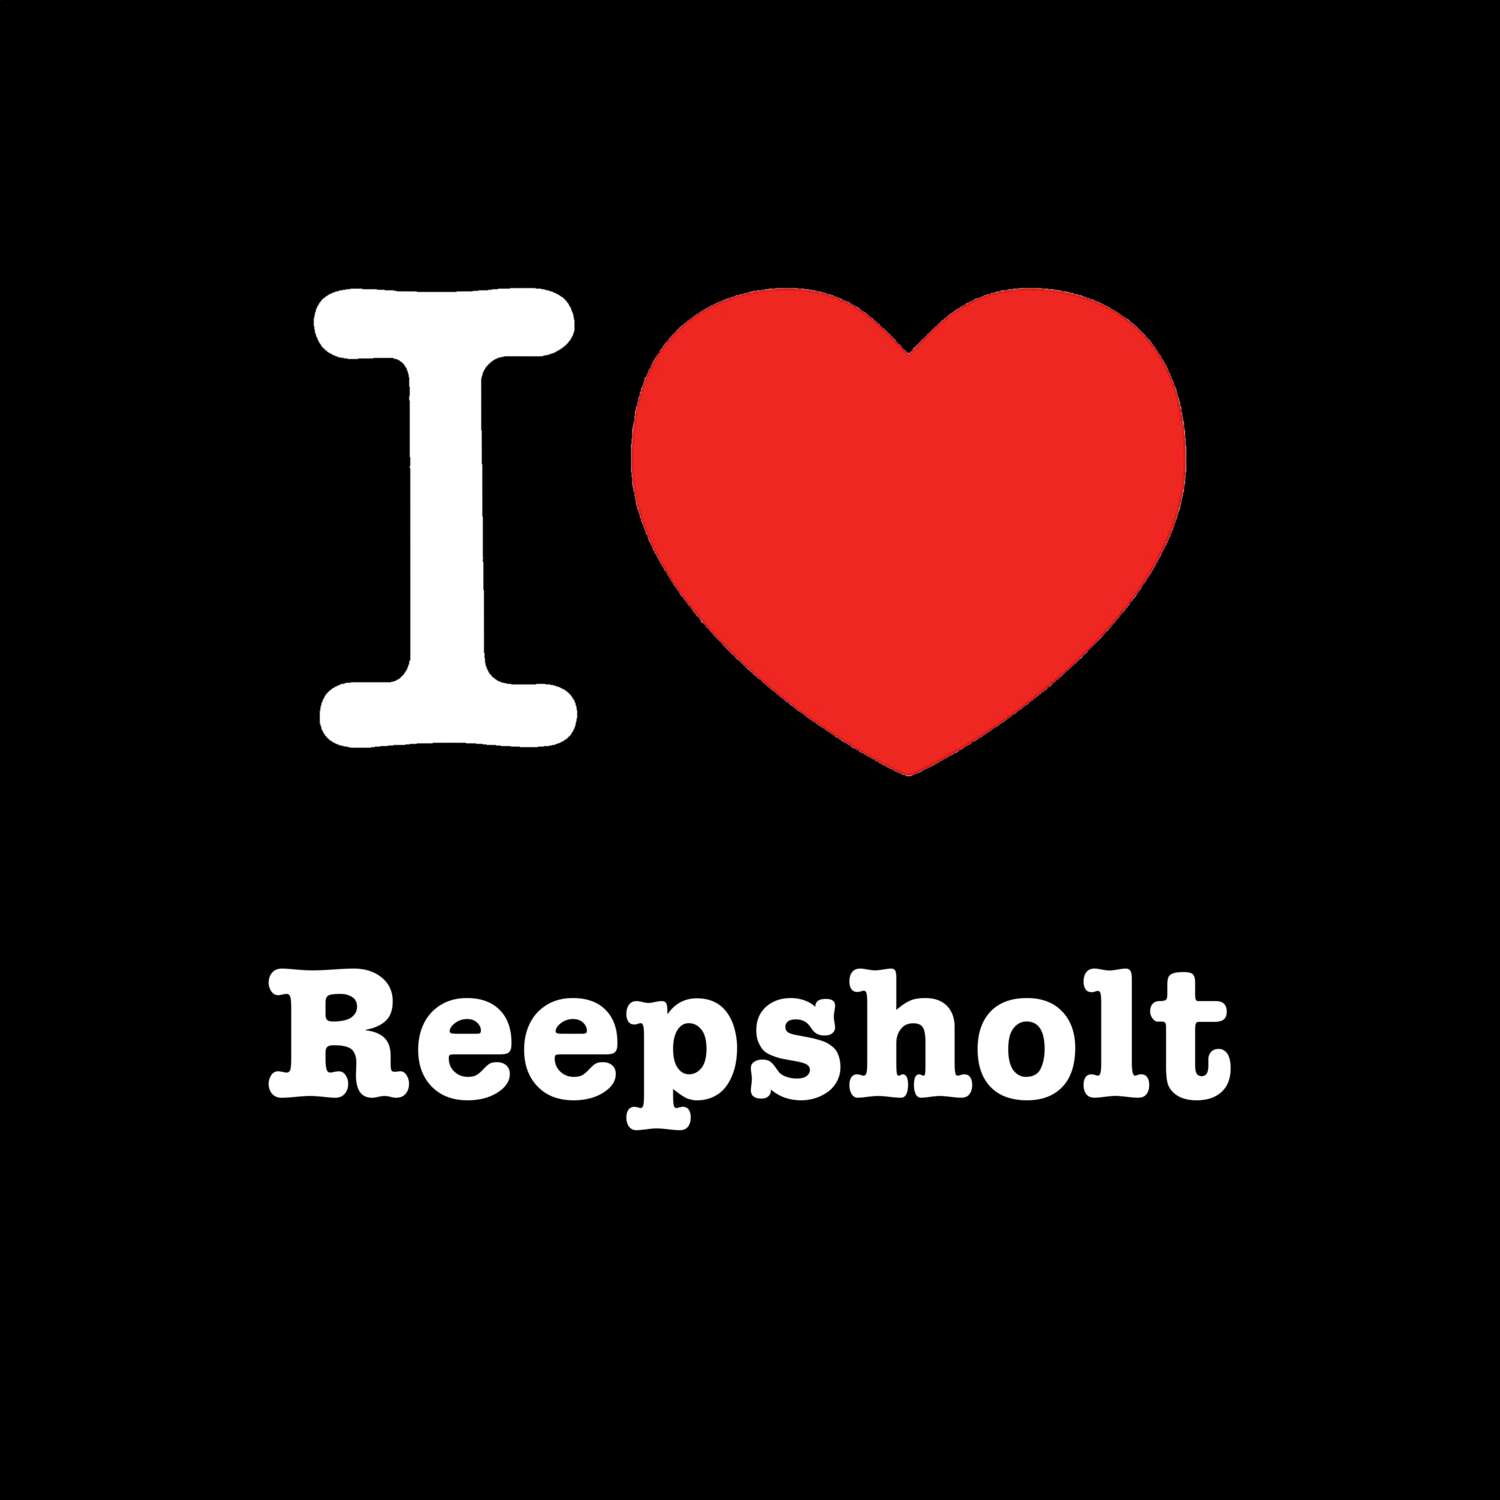 Reepsholt T-Shirt »I love«